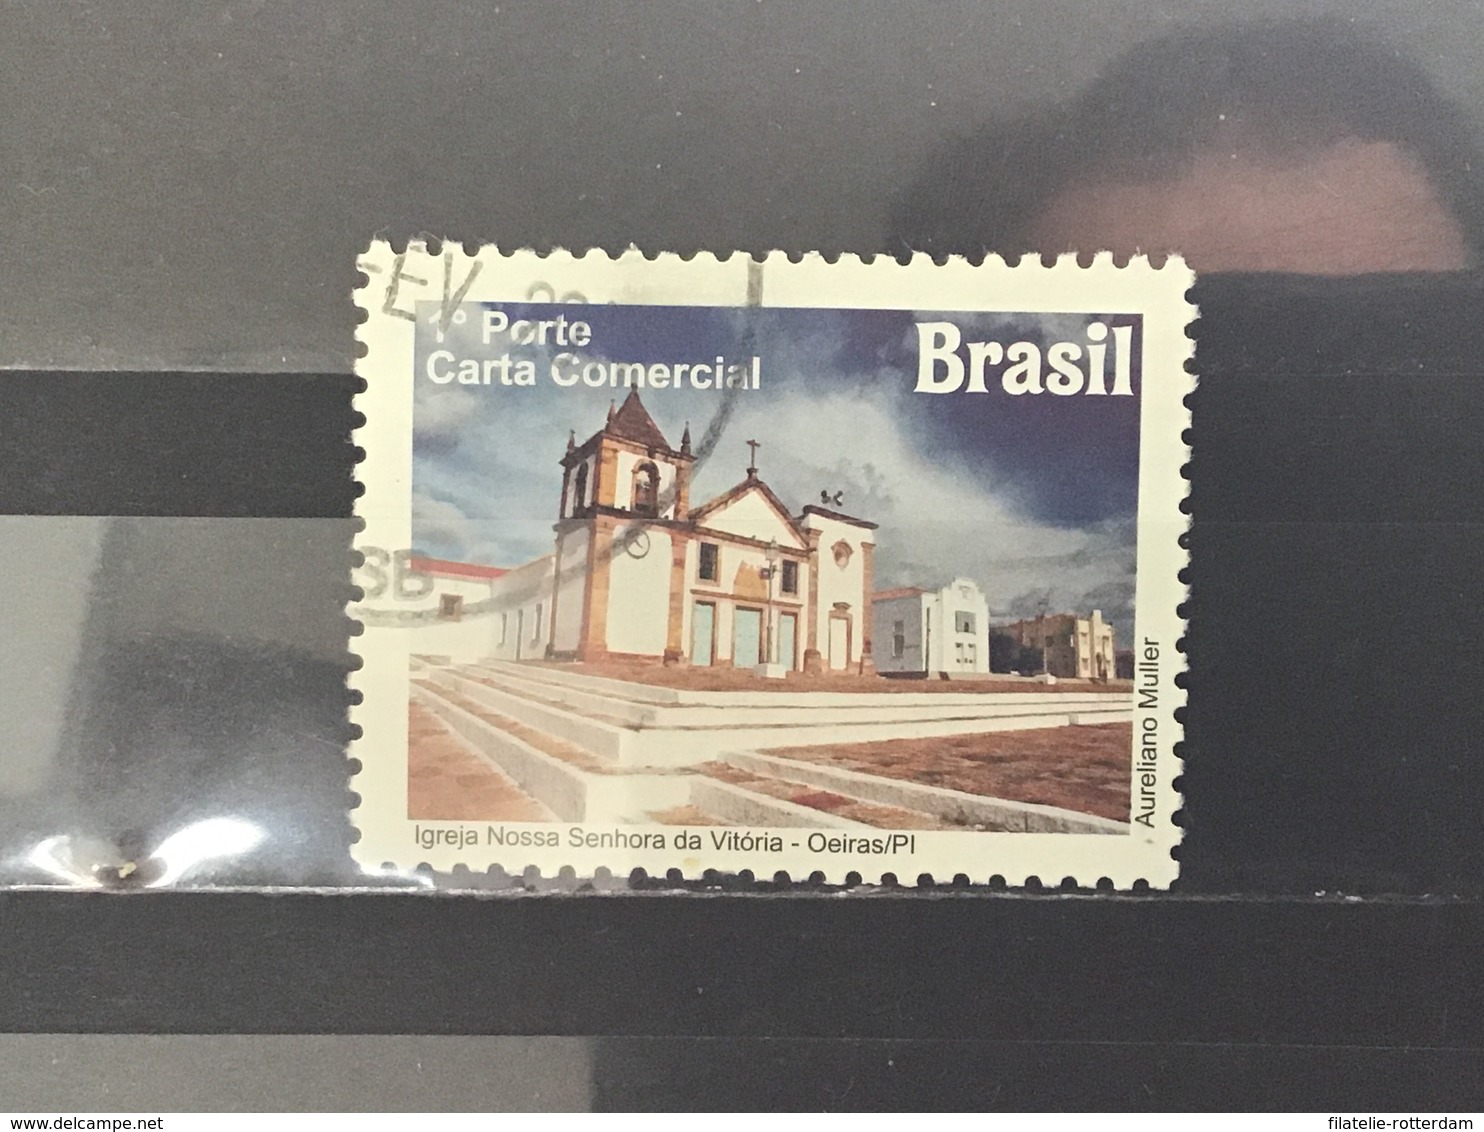 Brazilië / Brazil - Piaui 2011 - Used Stamps